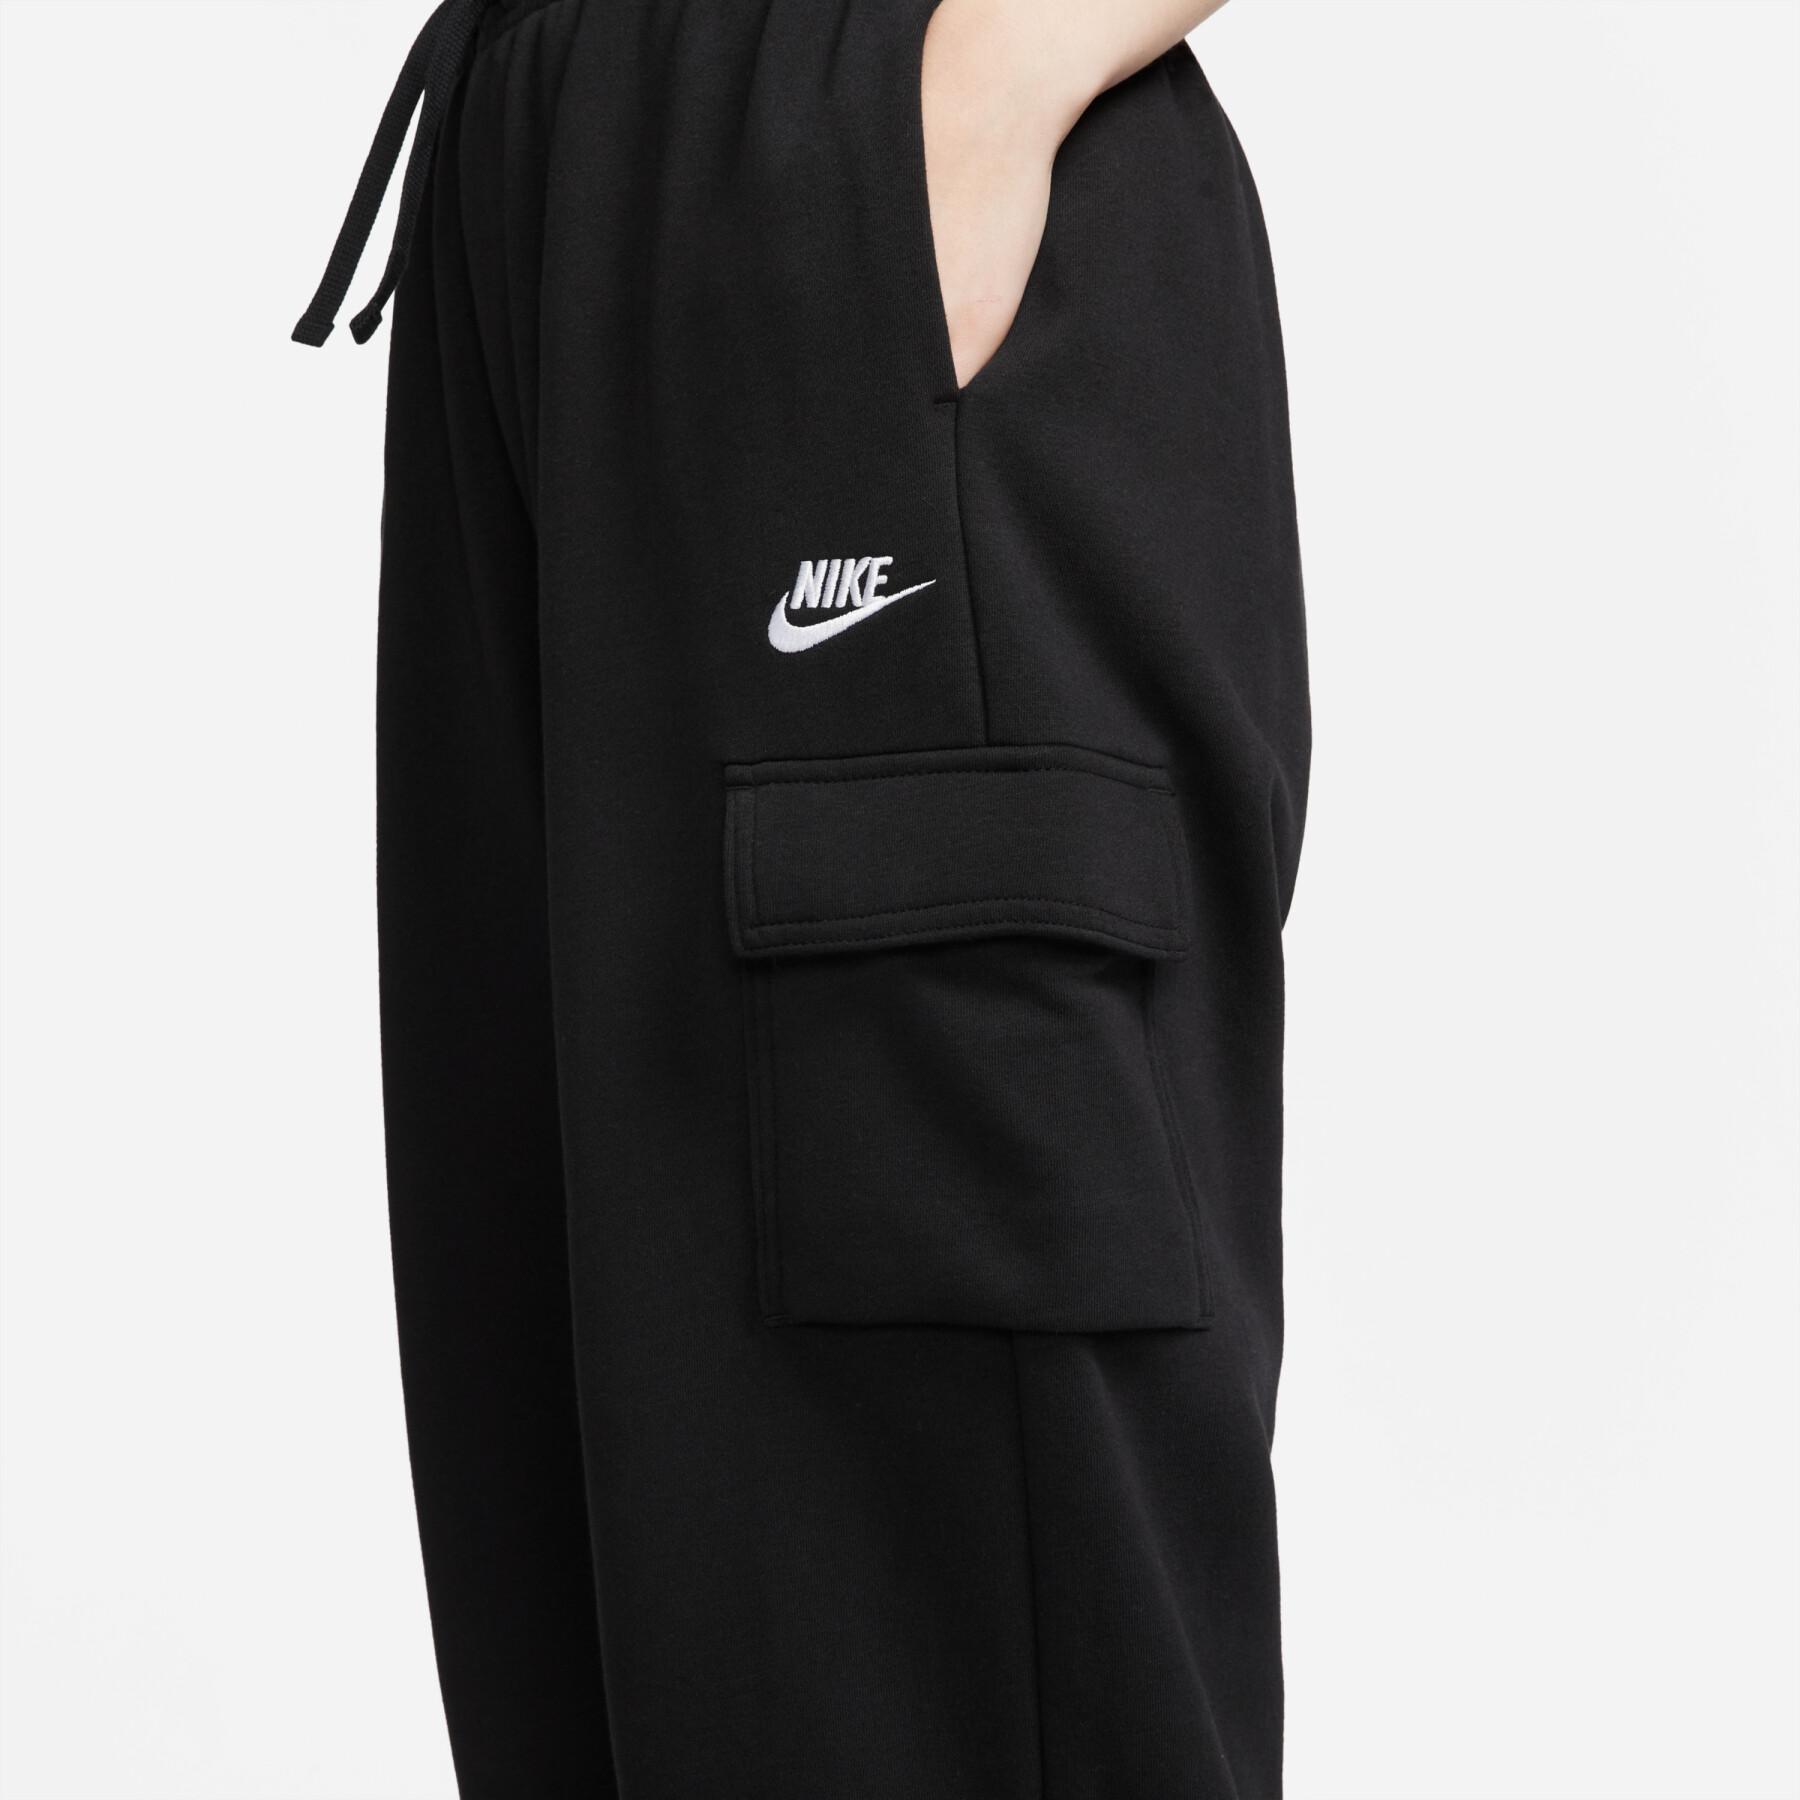 Pantalon cargo molleton femme Nike Sportswear Club